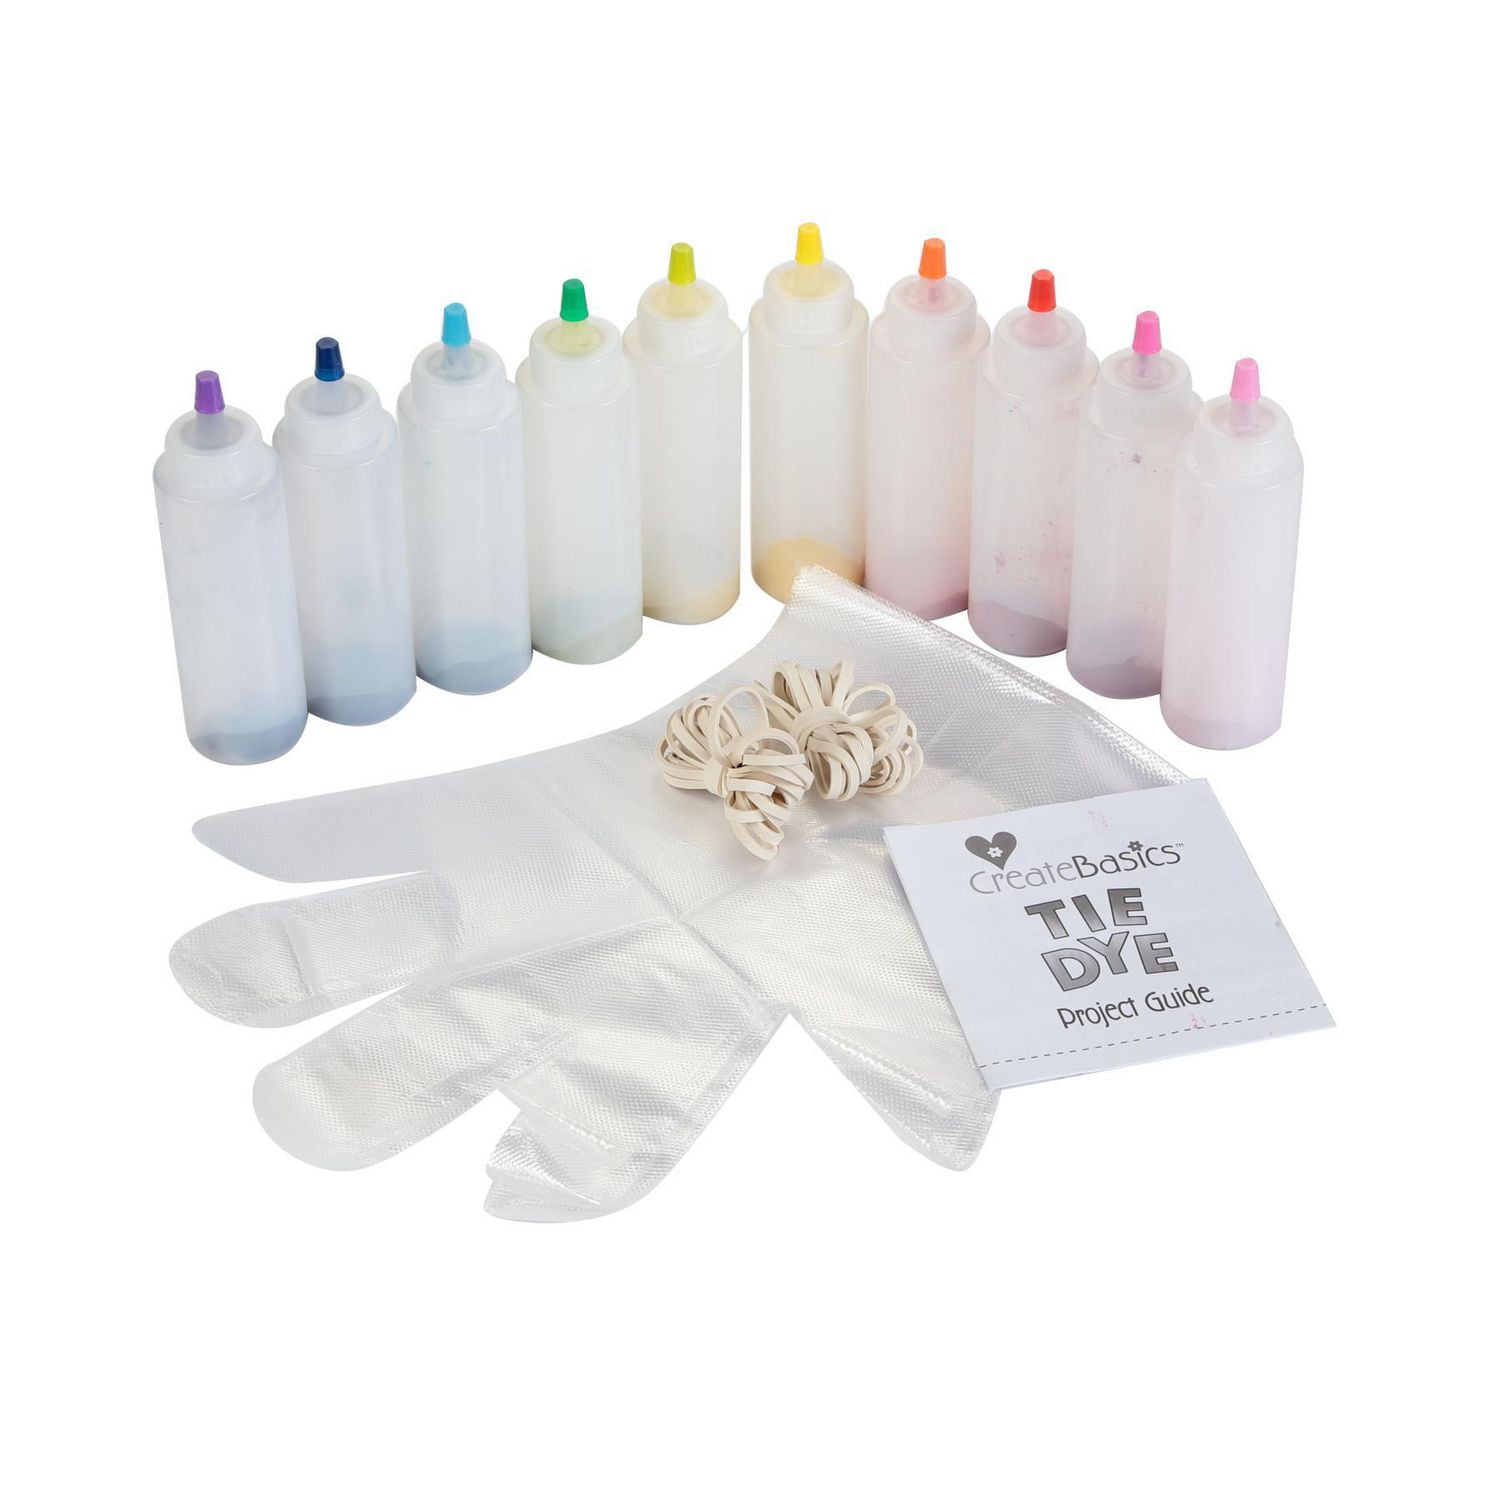 Create Basics Tie Dye Party Tub Kit - Rainbow Tie Dye in 14 Colors